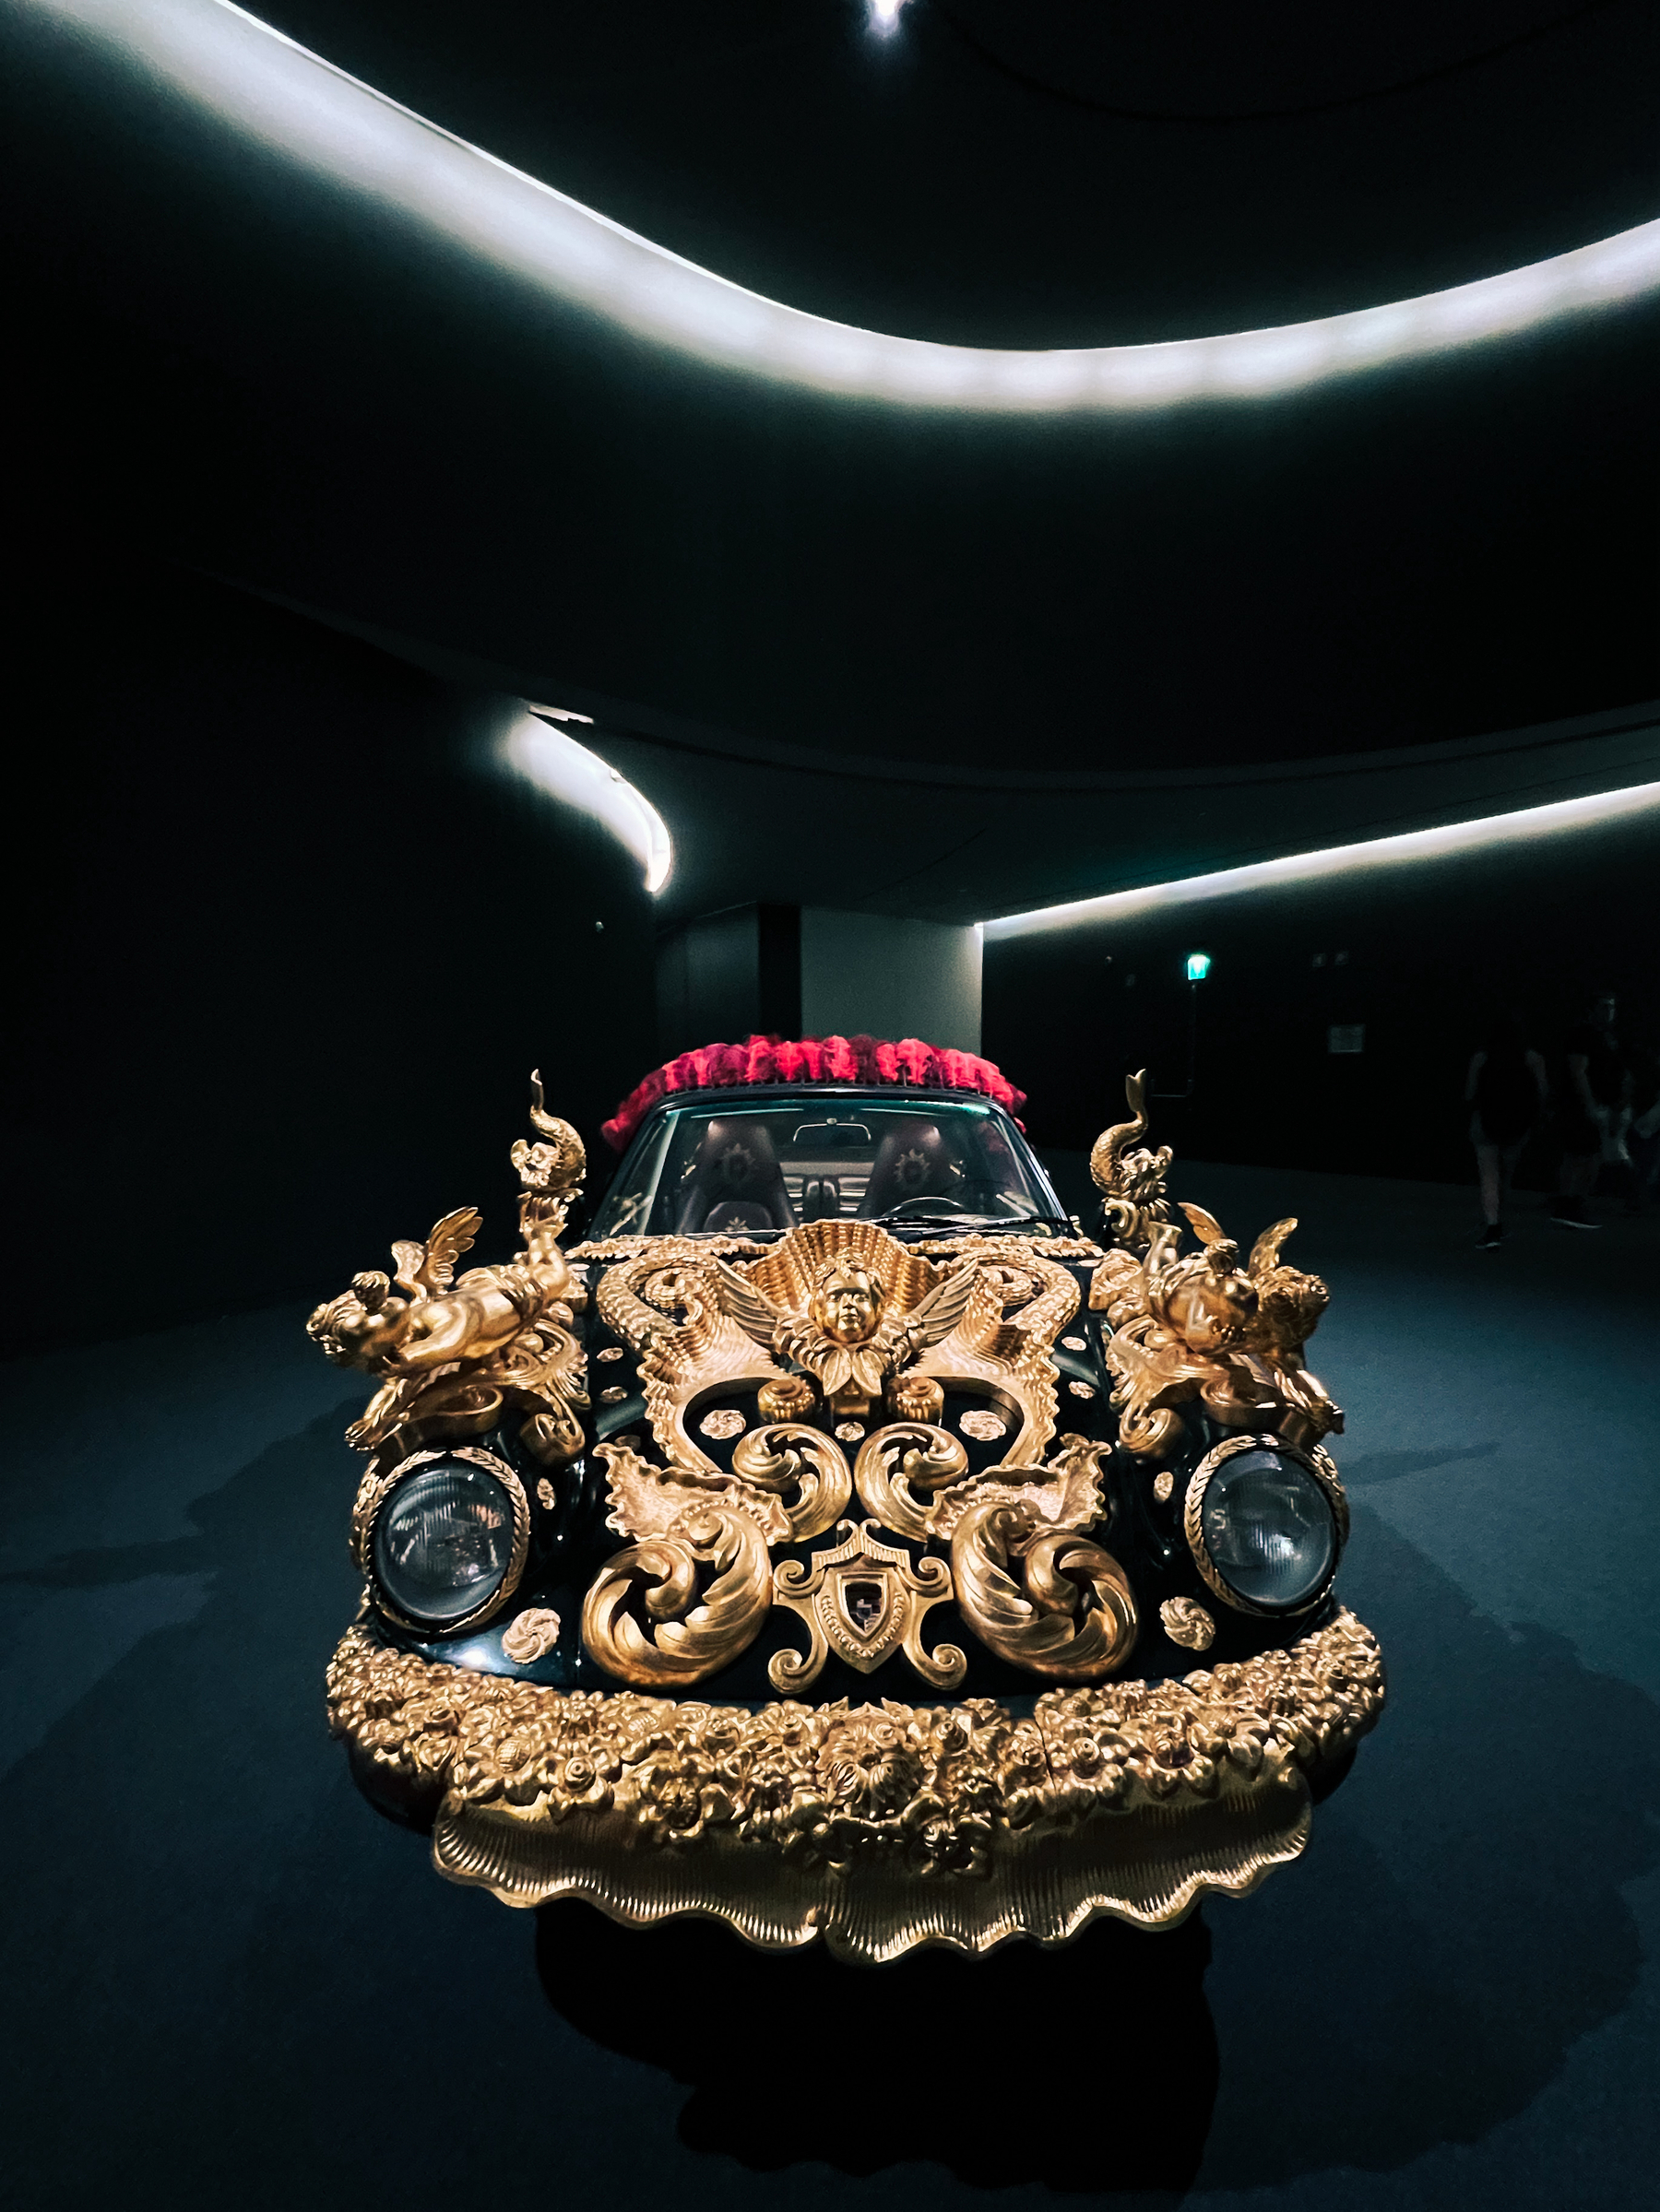 A Porsche, art work by Joana Vasconcelos. 